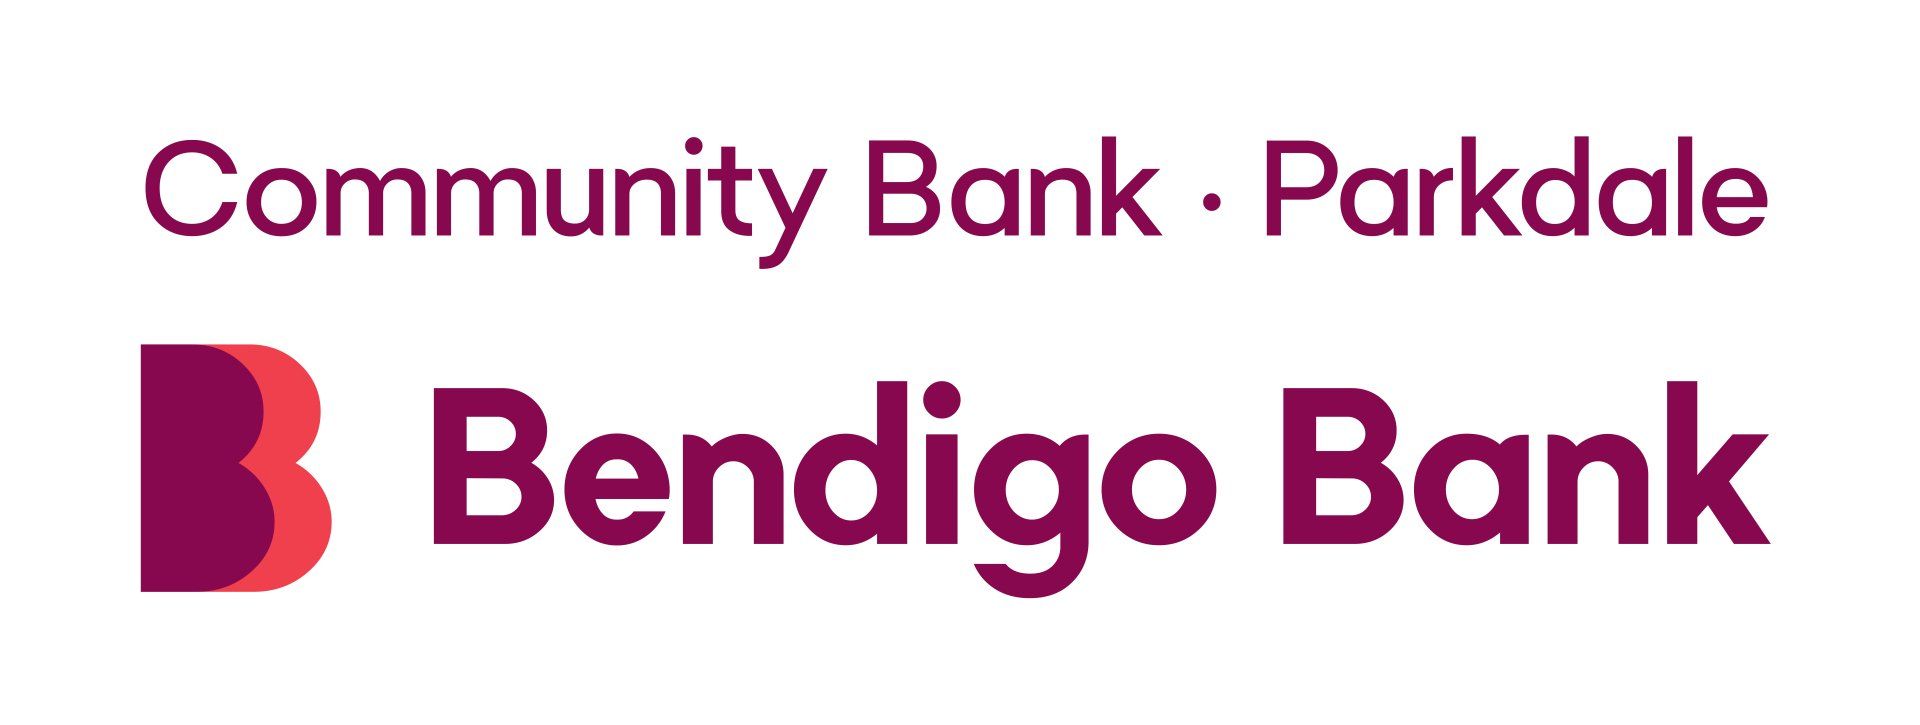 Community Bank Parkdale